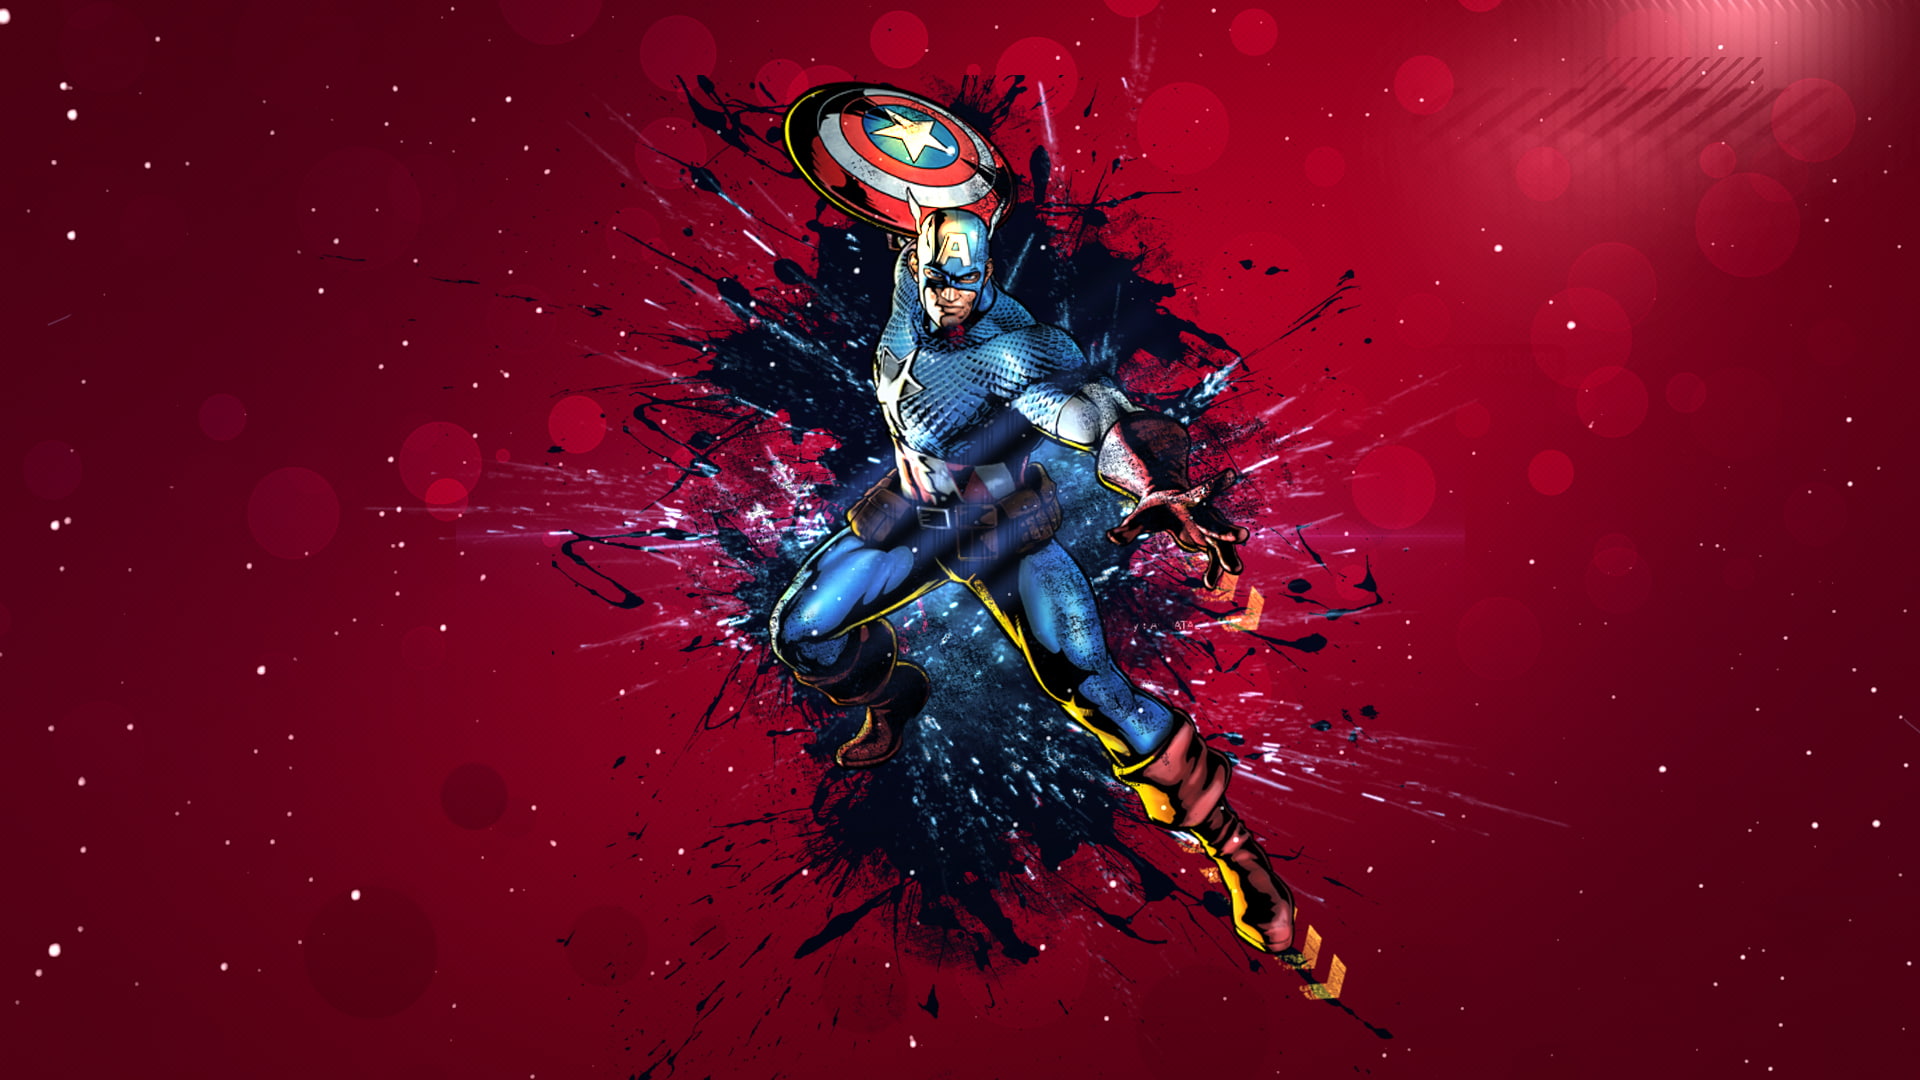 Marvel Captain America illustration, jump, mask, form, shield